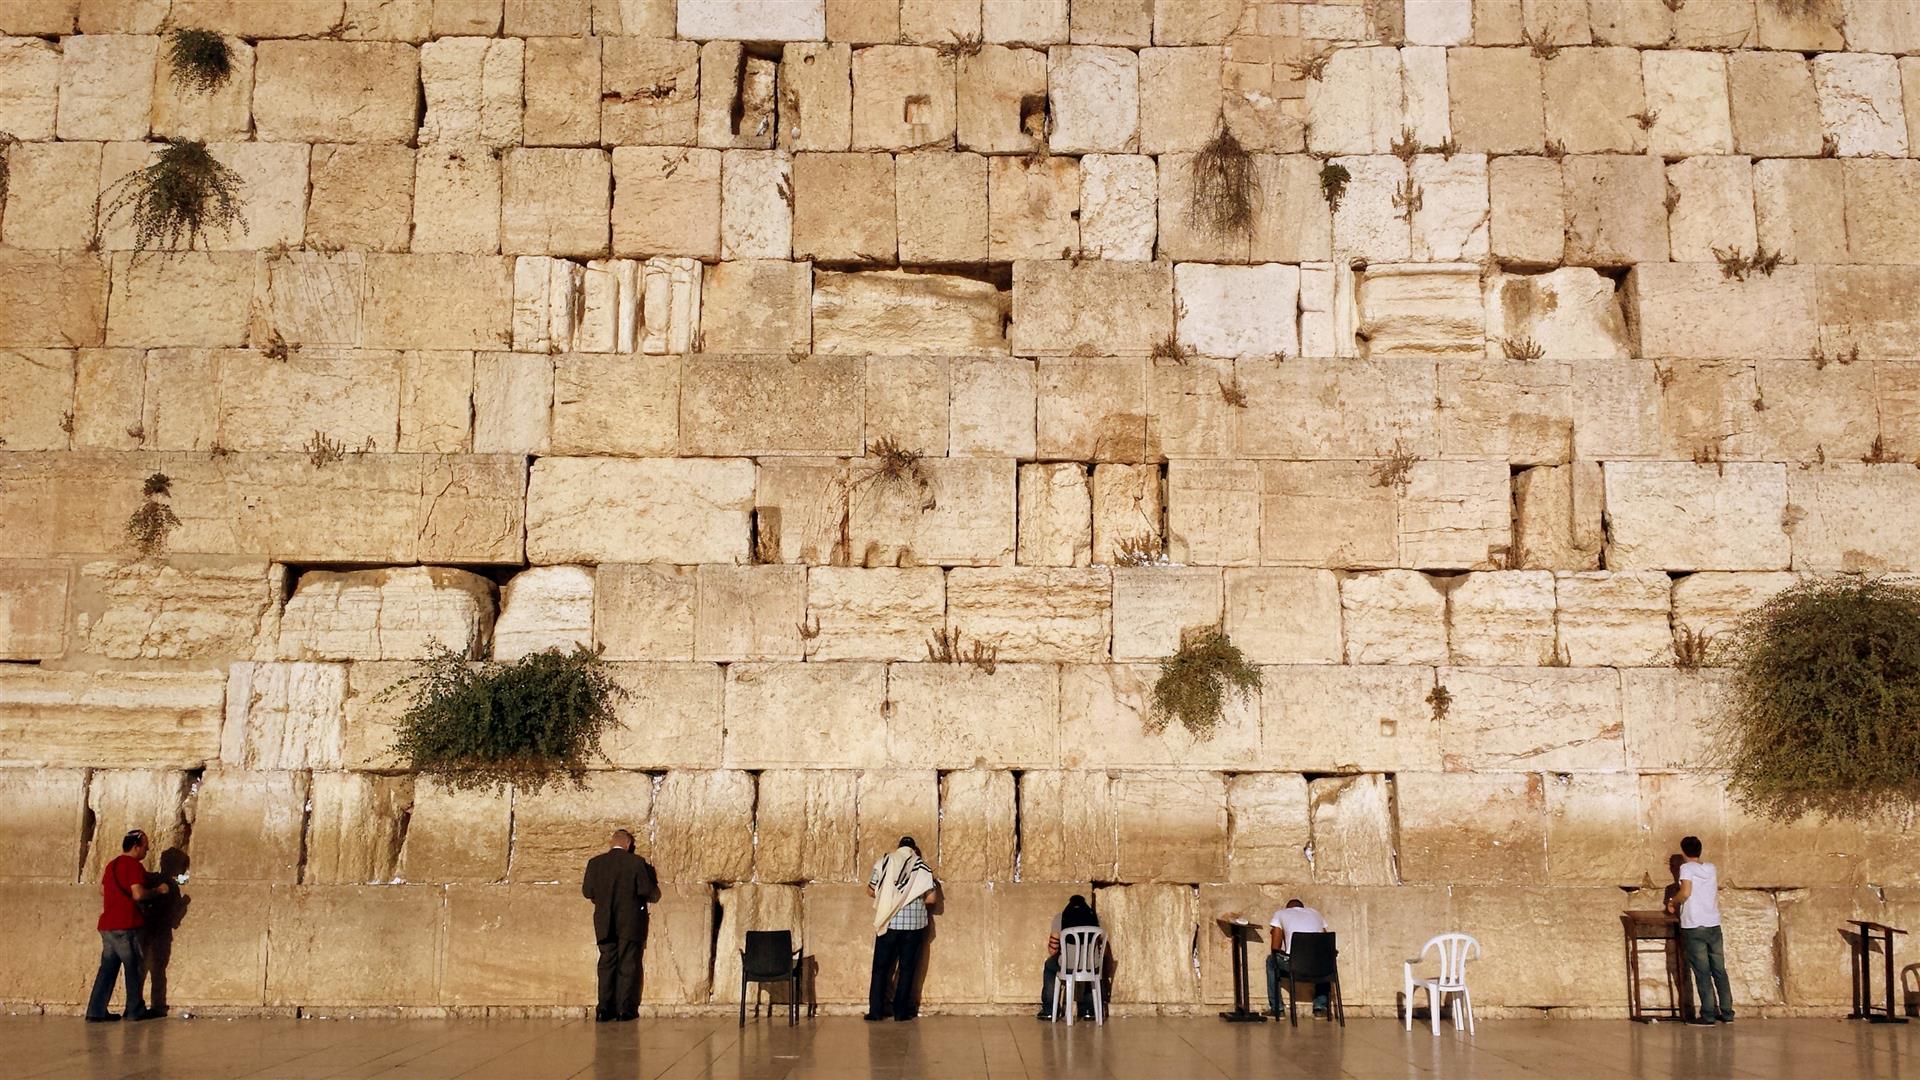 Wailing Wall, Jerusalem - Western Wall , HD Wallpaper & Backgrounds